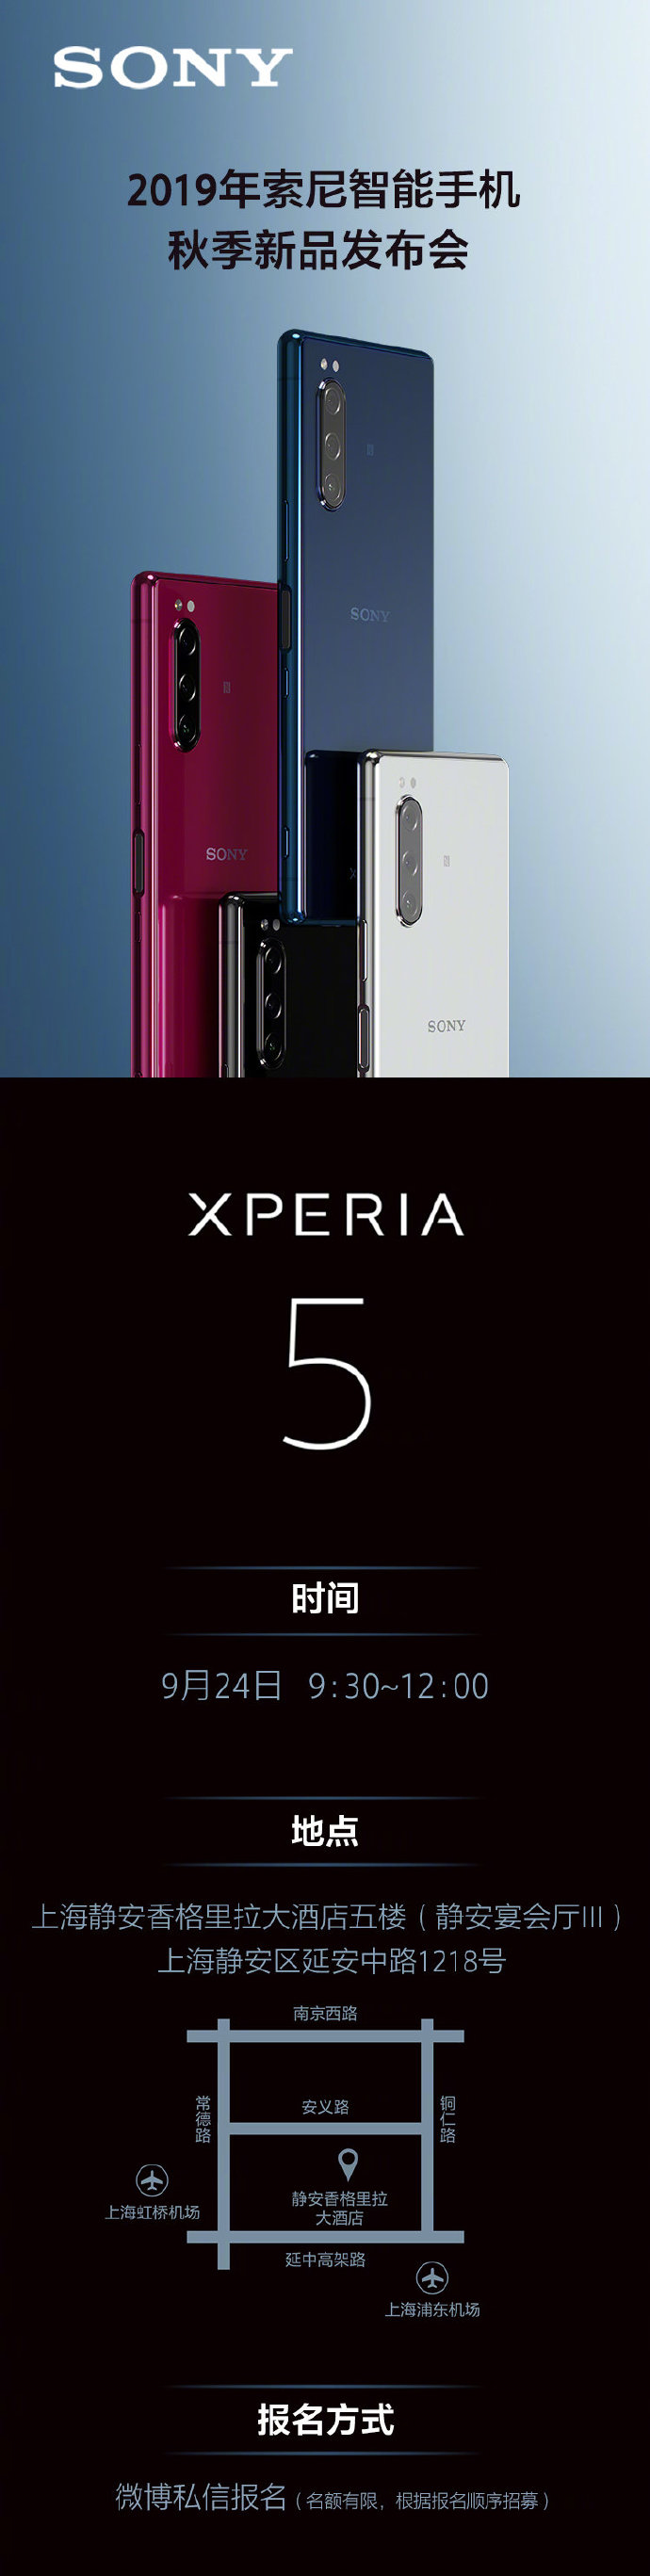 Sony Xperia 5 China launch